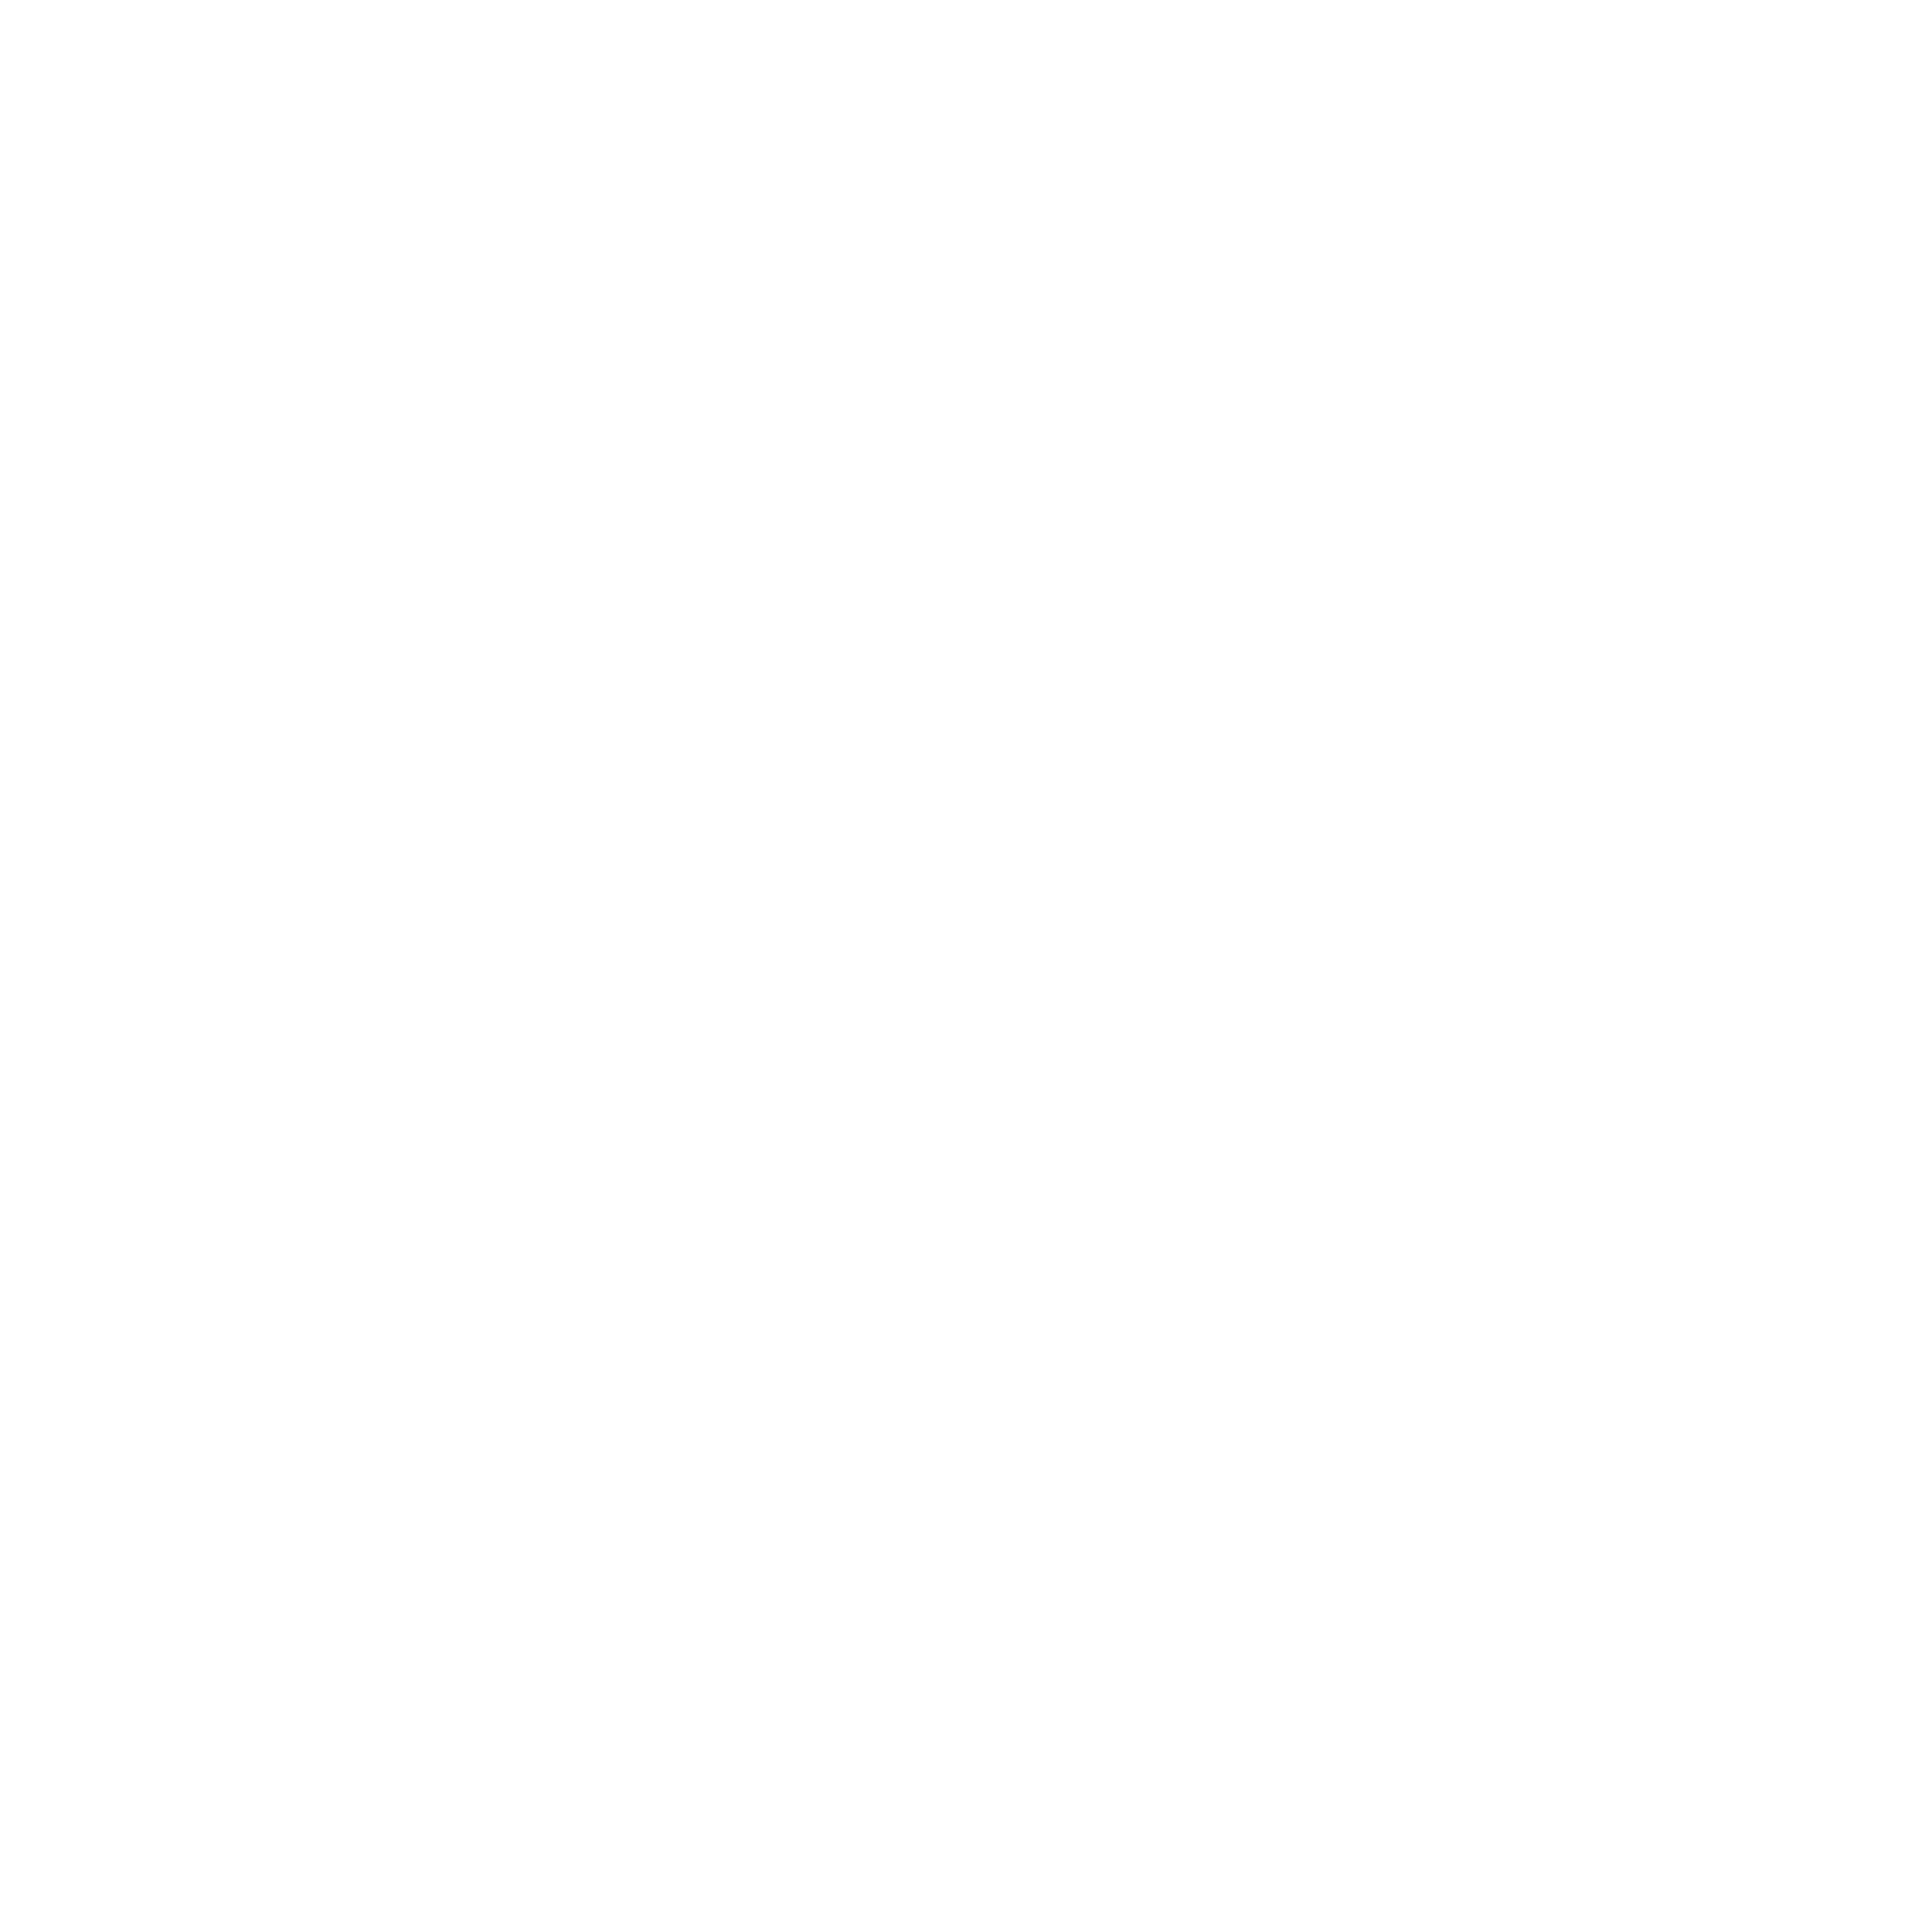 Datzphotography